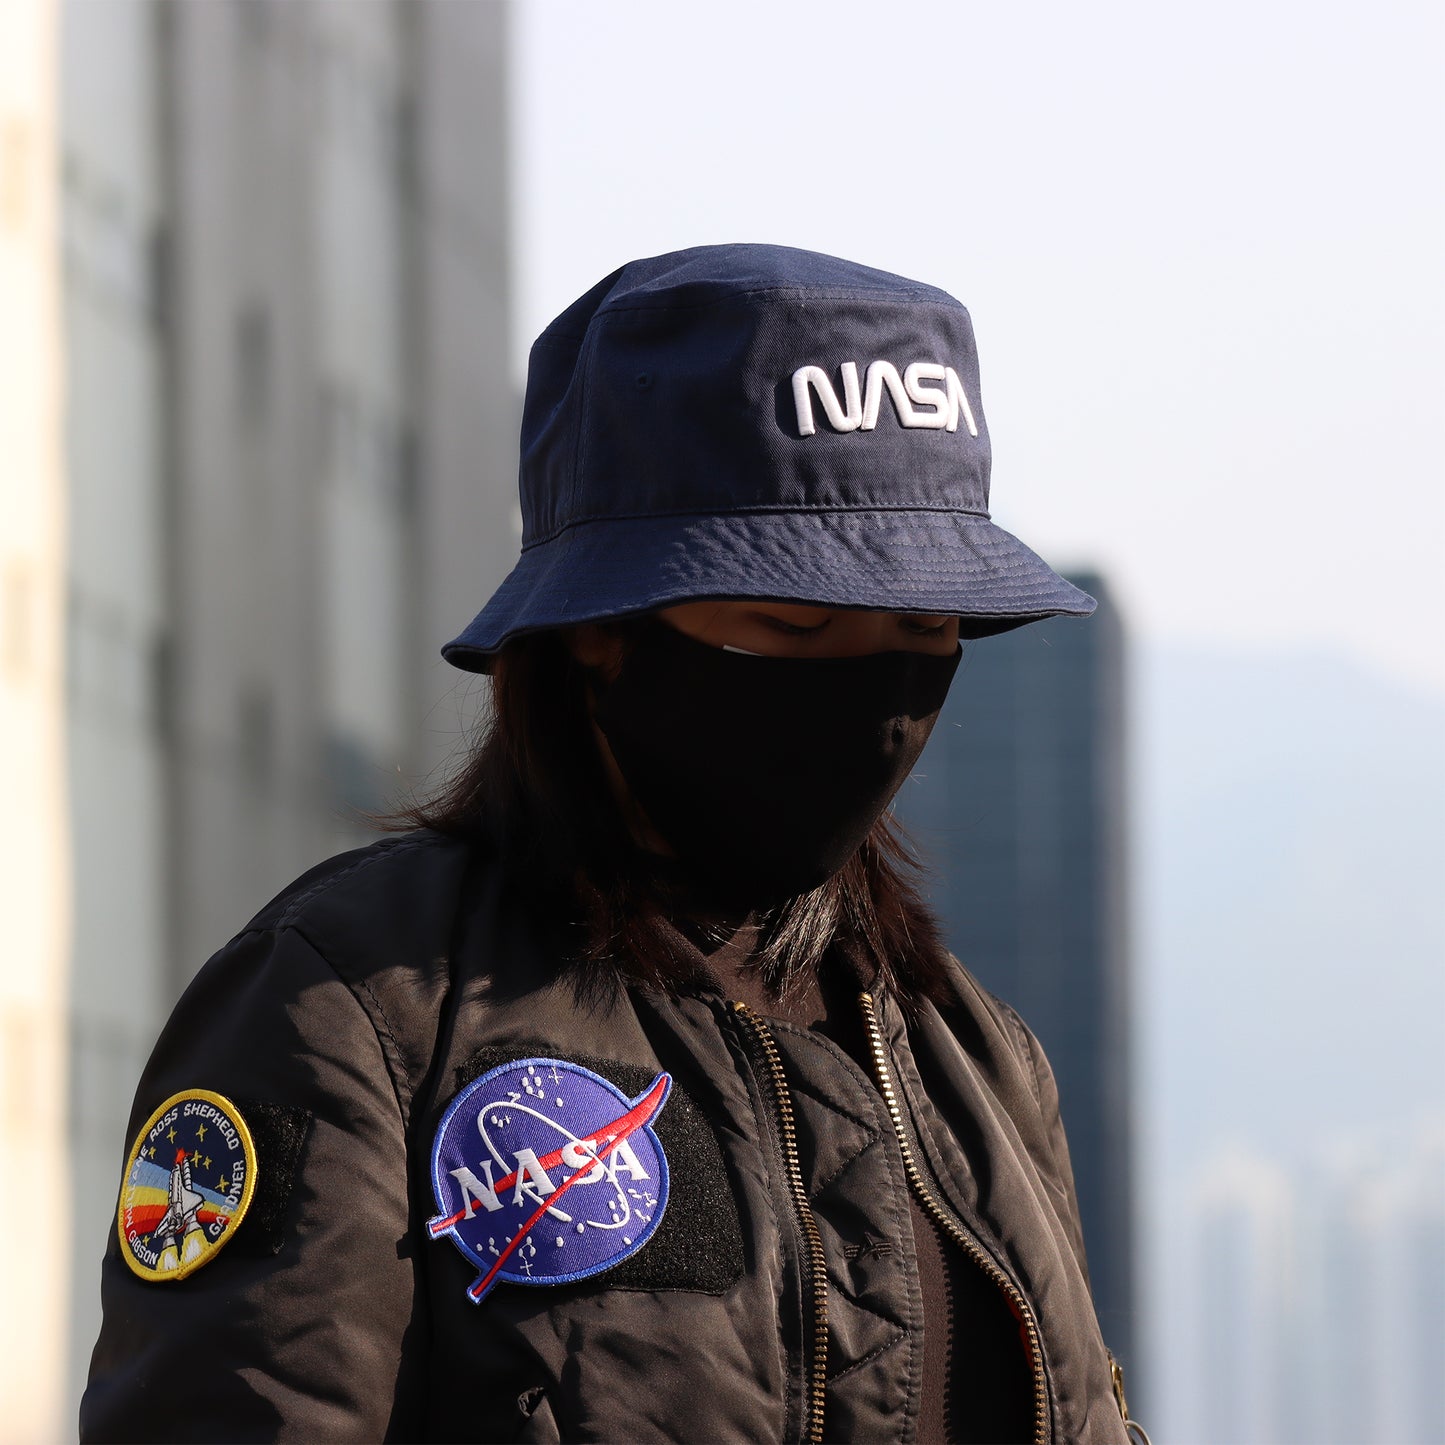 NASA Relaxed Bucket Hats